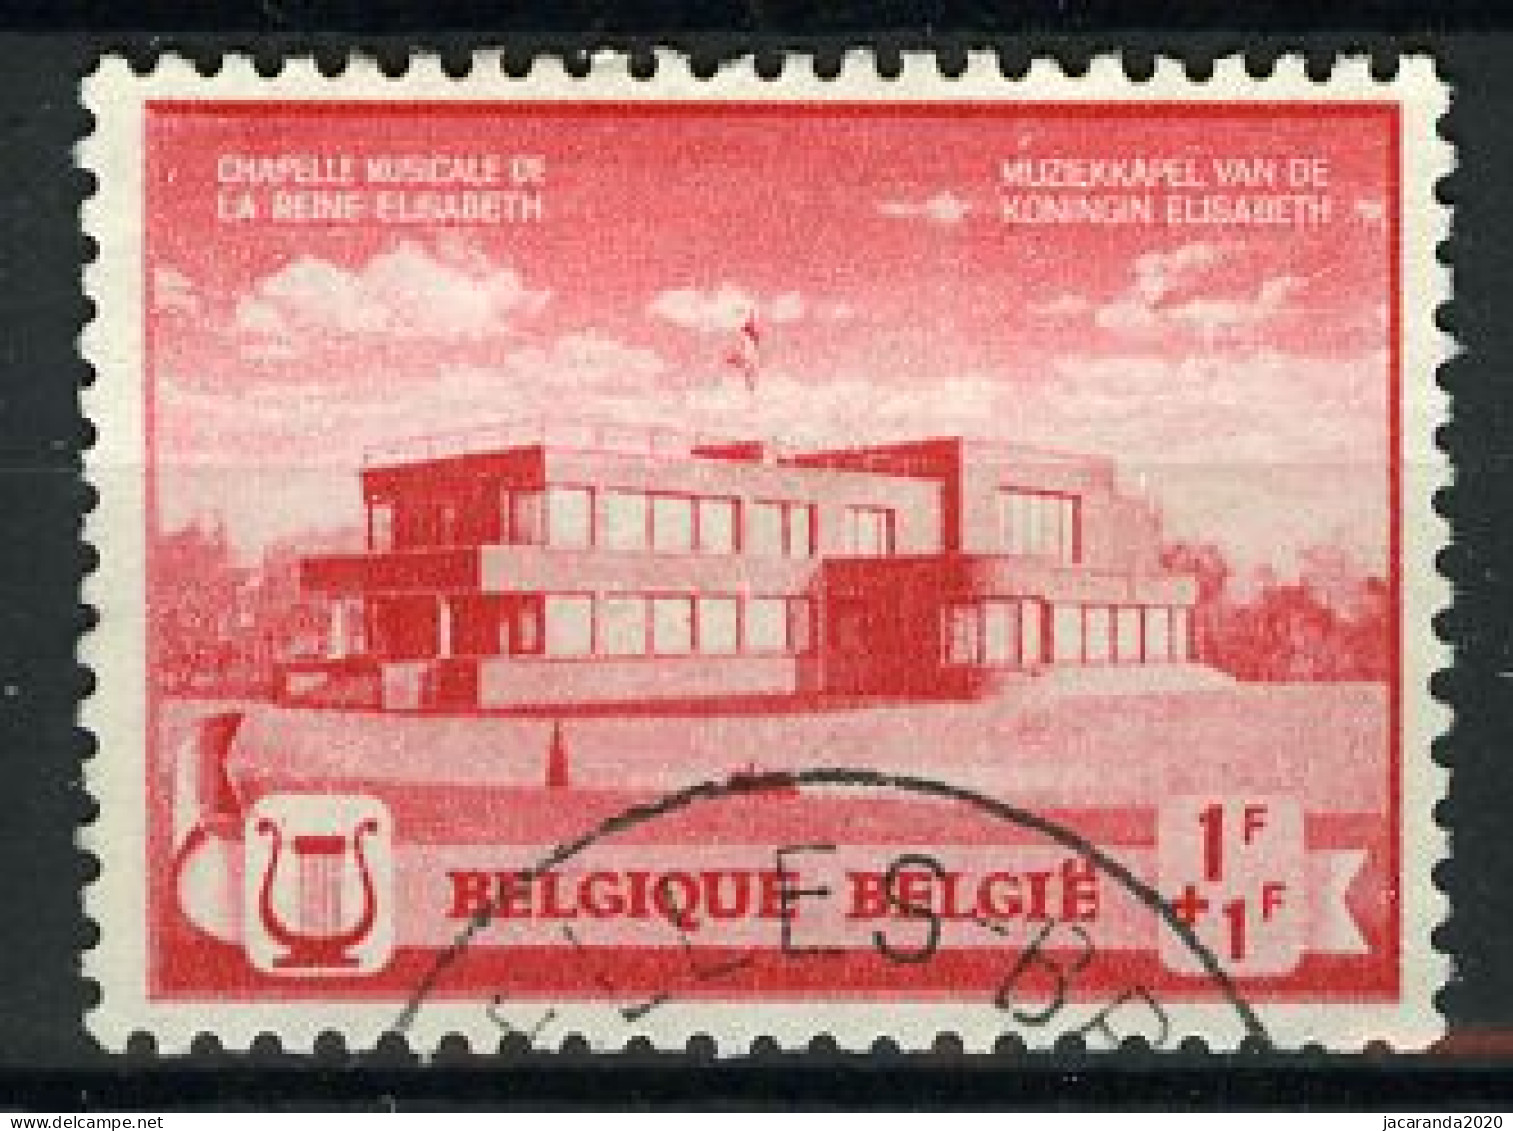 België 533 - Muziekstichting Koningin Elisabeth - Muziekkapel - Gestempeld - Oblitéré - Used - Used Stamps